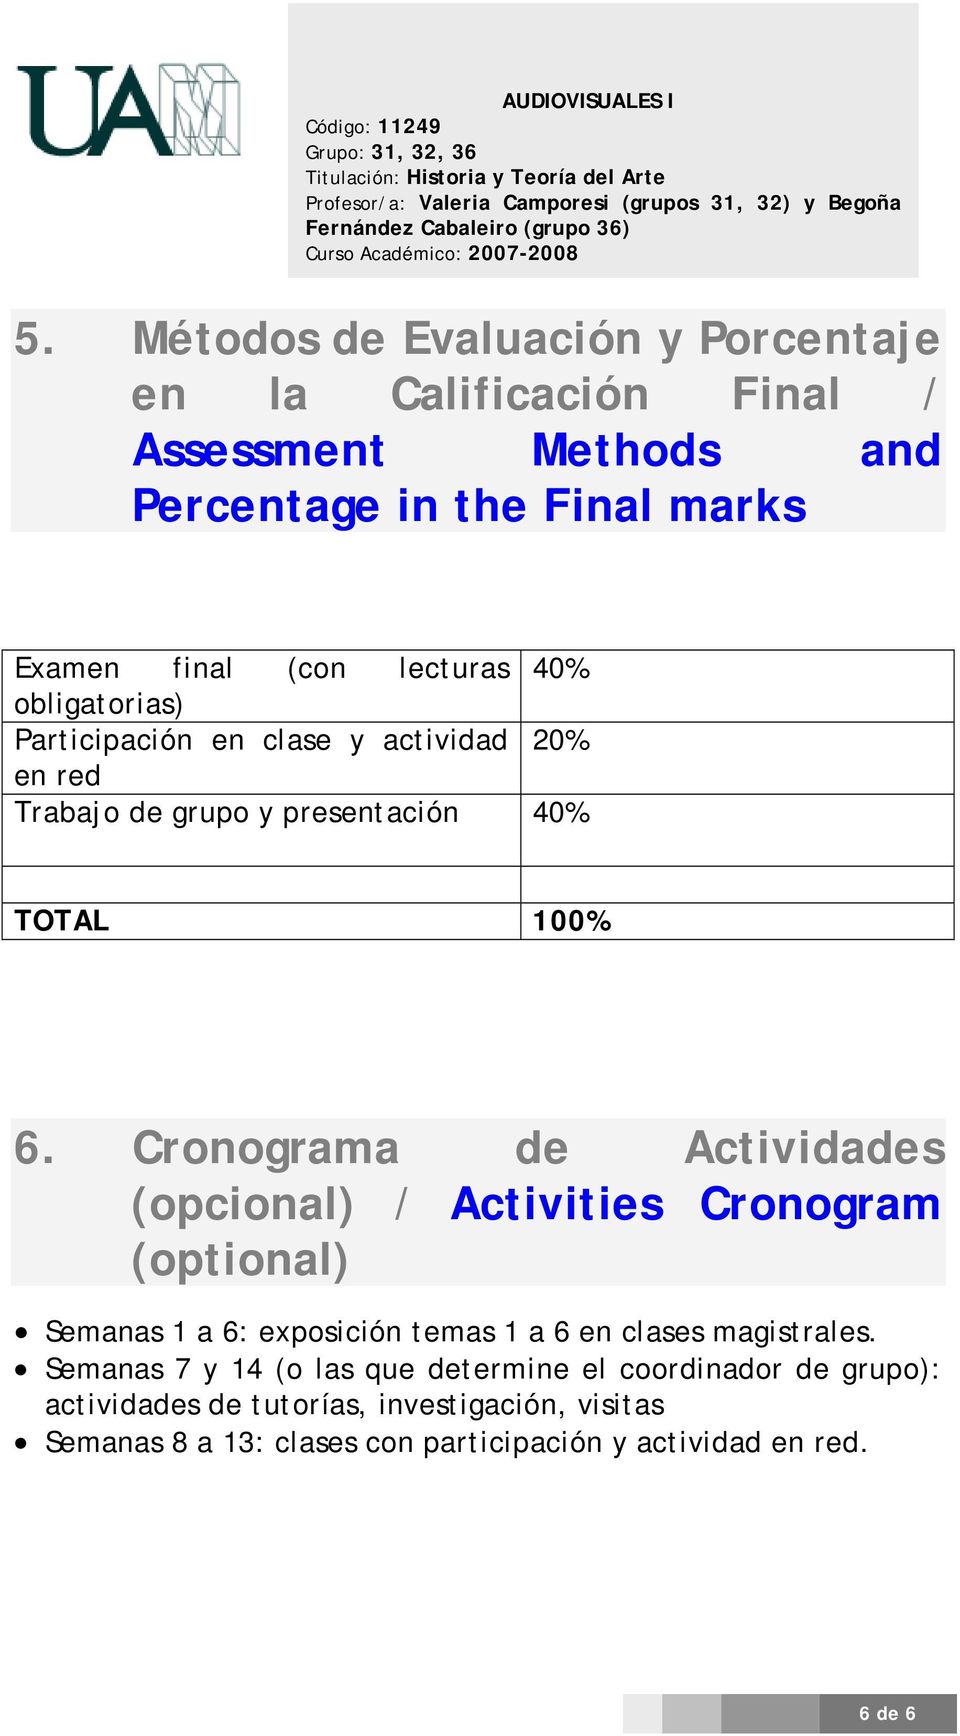 Cronograma de Actividades (opcional) / Activities Cronogram (optional) Semanas 1 a 6: exposición temas 1 a 6 en clases magistrales.